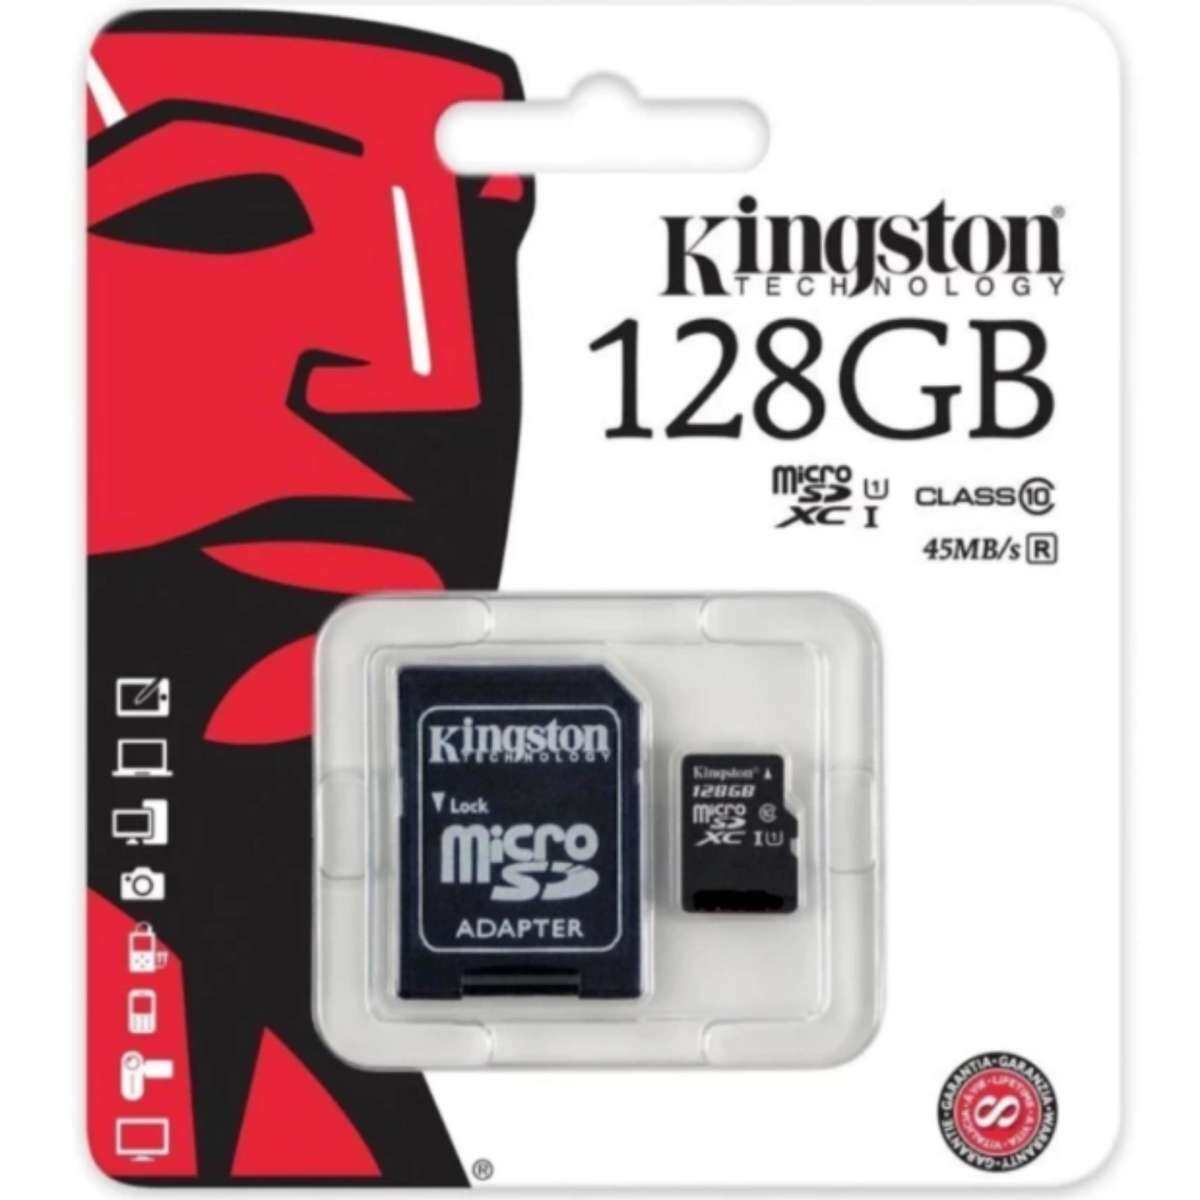 Buy home  [แท้100%]] Kingston Memory Card Micro SD SDHC 128 GB Class 10 คิงส์ตัน เมมโมรี่การ์ด 128 GB Kingston